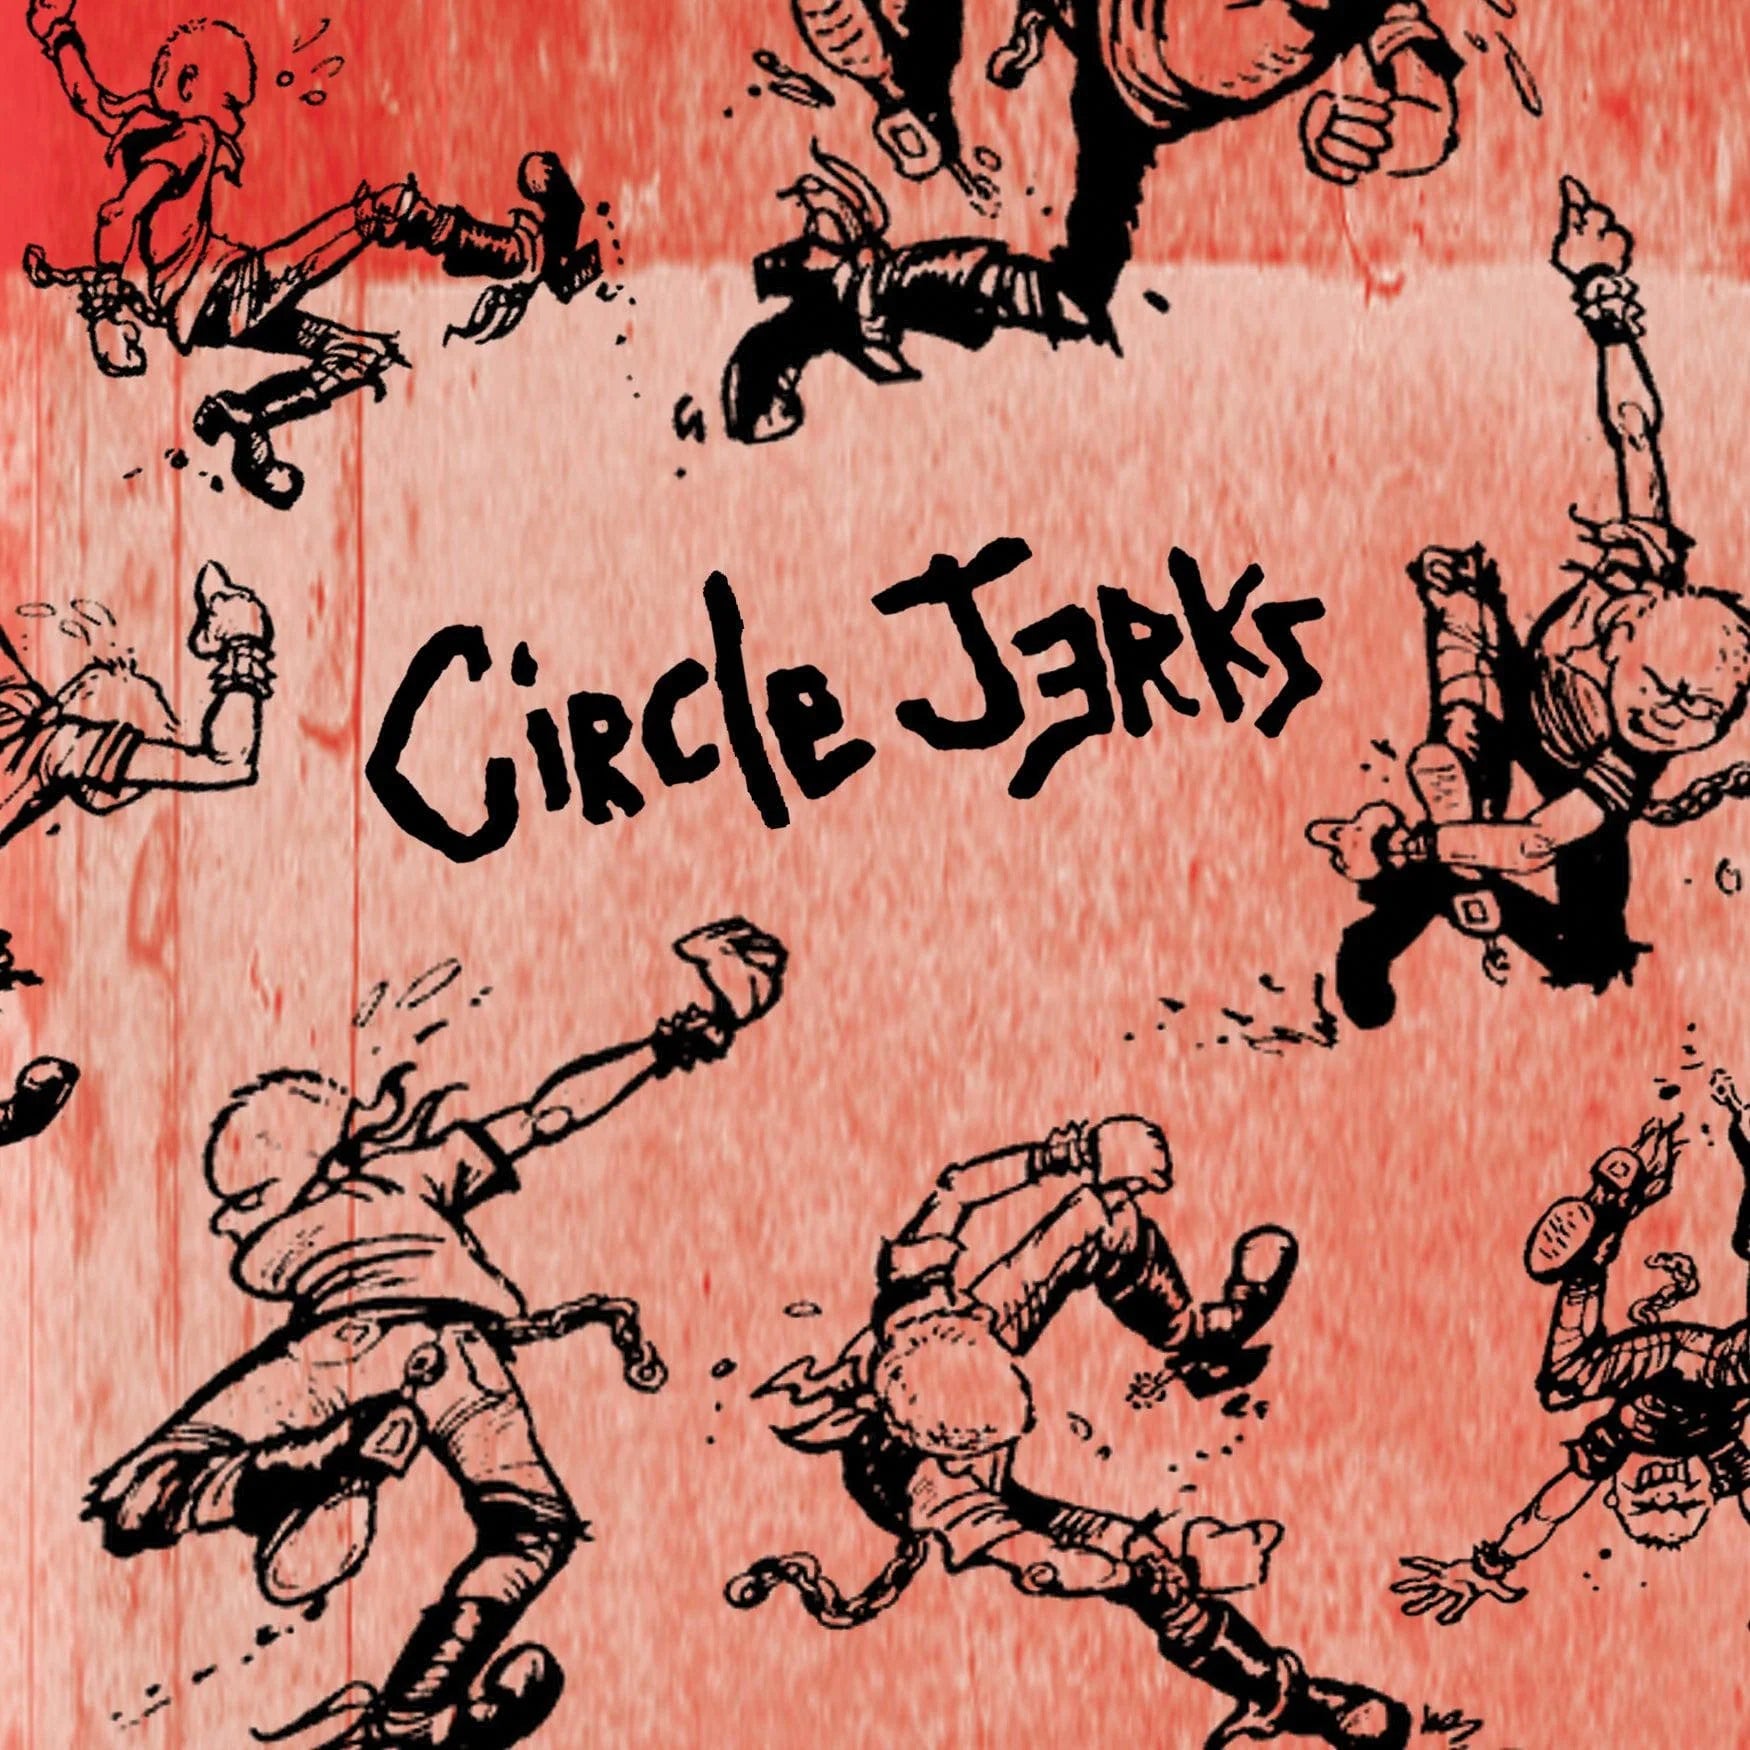 Circle Jerks (@CircleJerksBand) / X